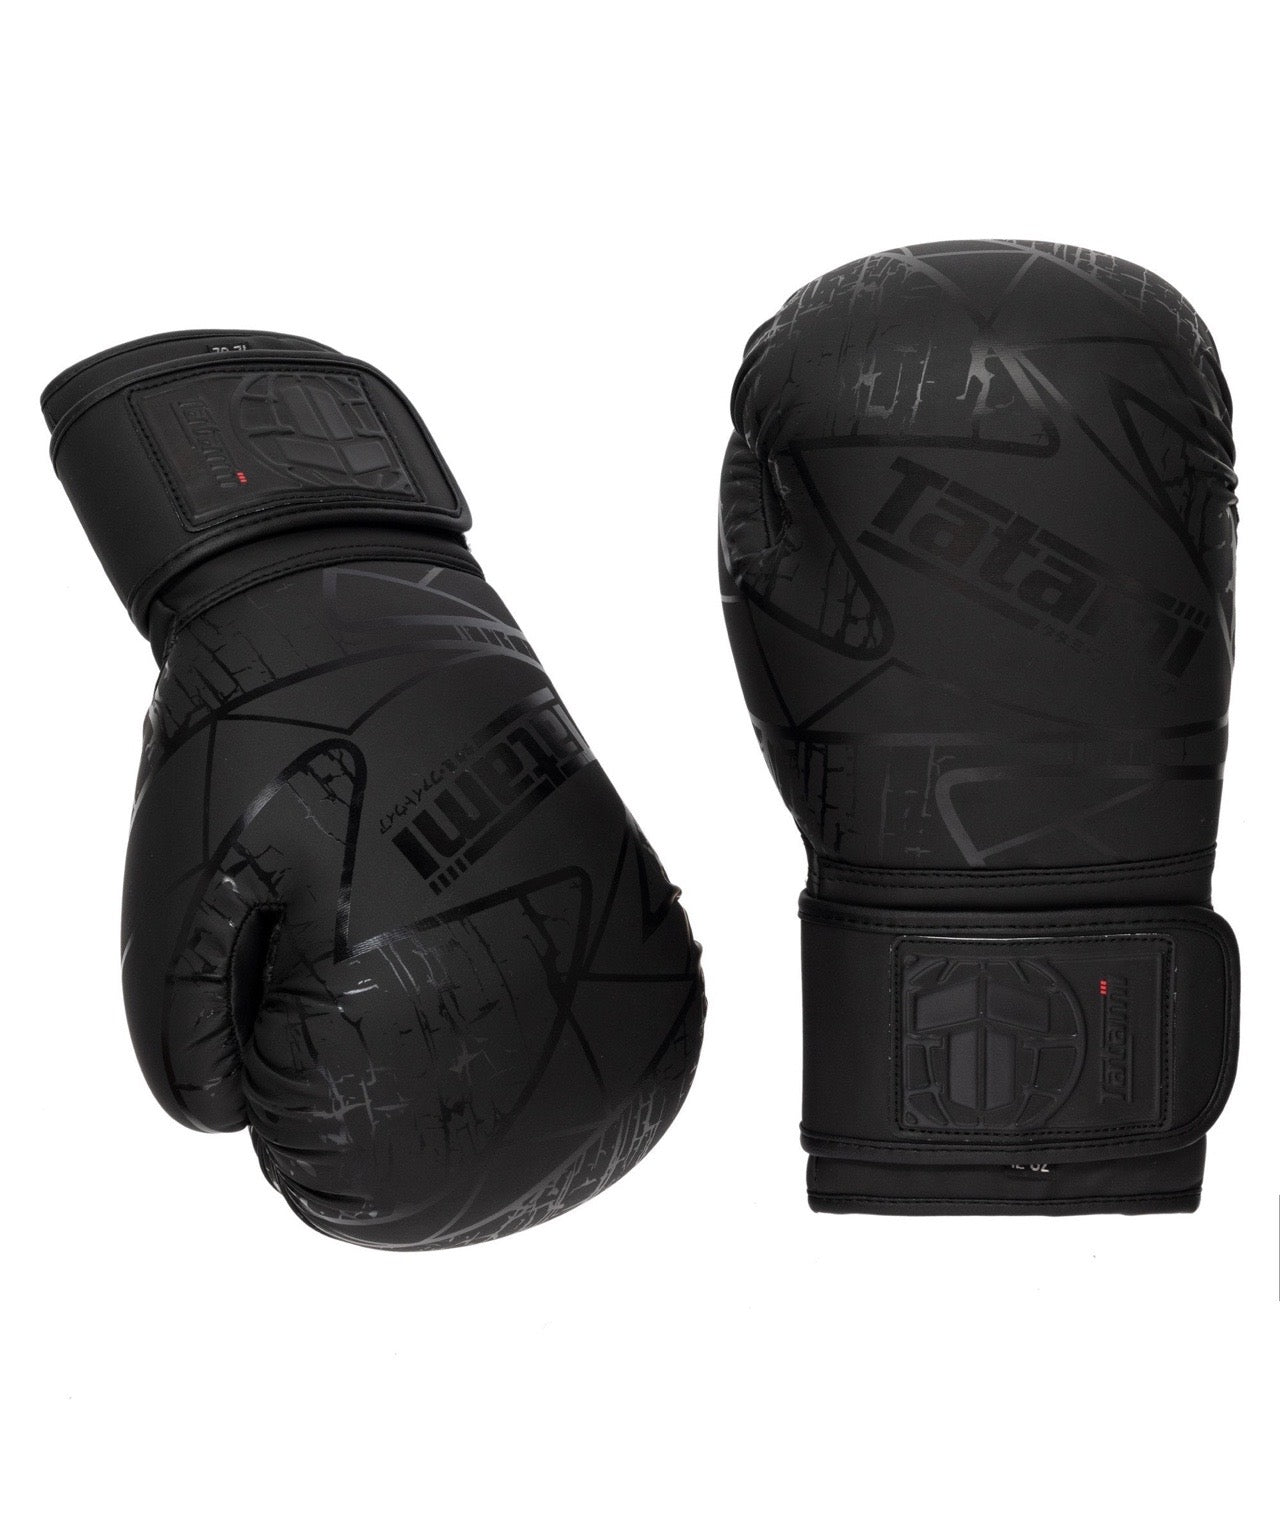 TATAMI Obsidian Boxing Gloves